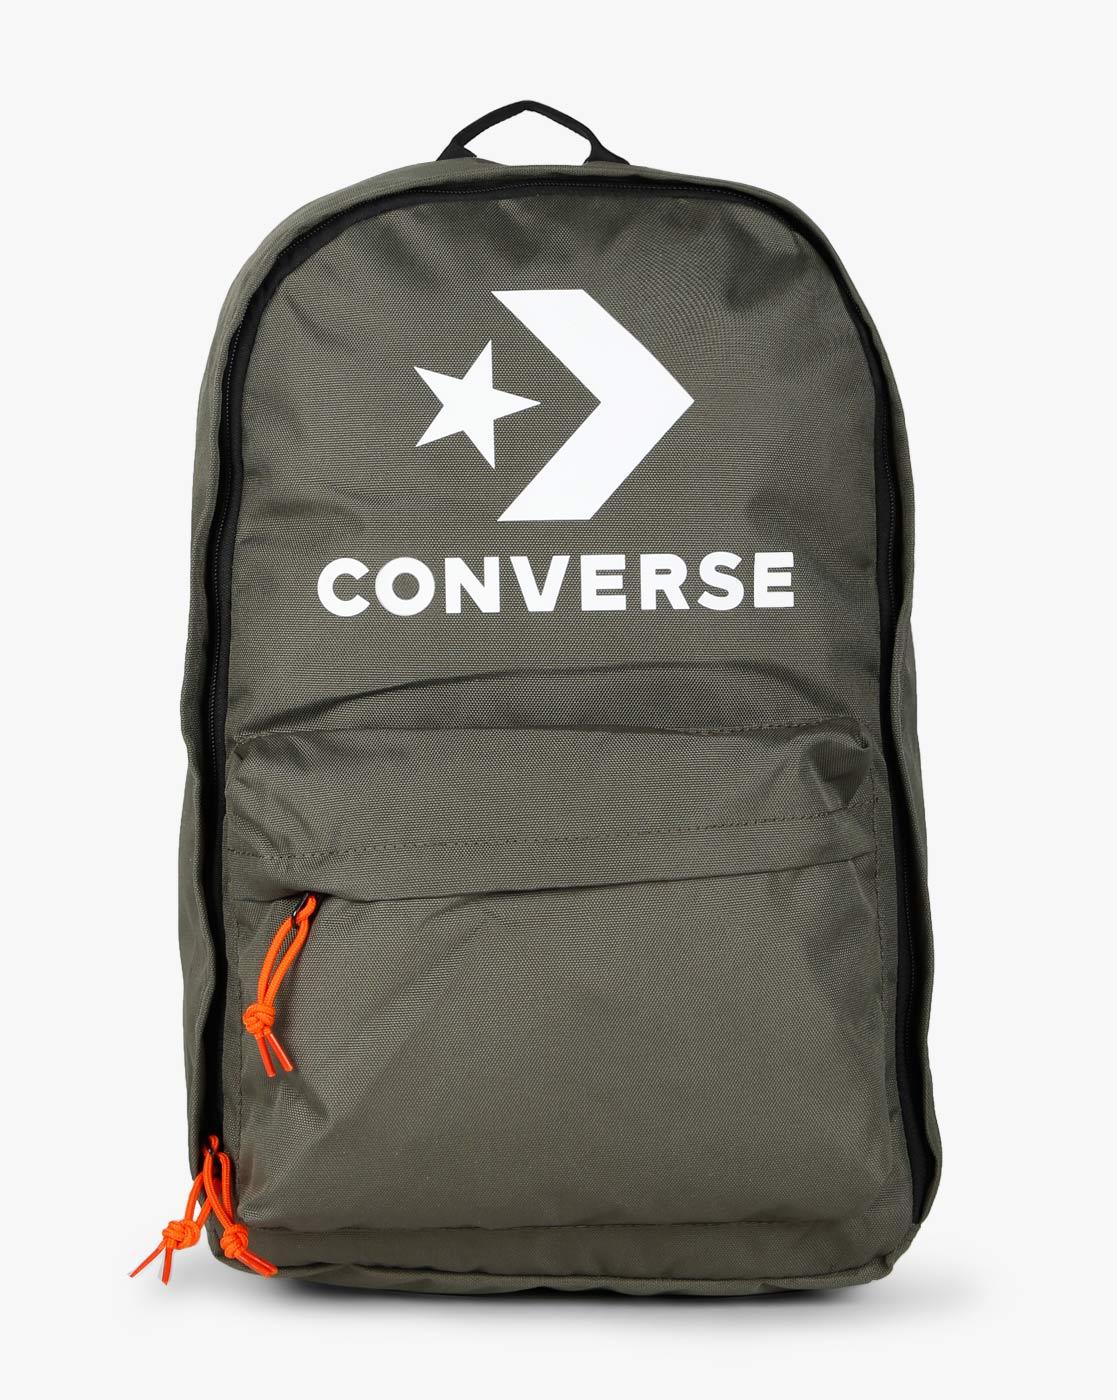 converse laptop